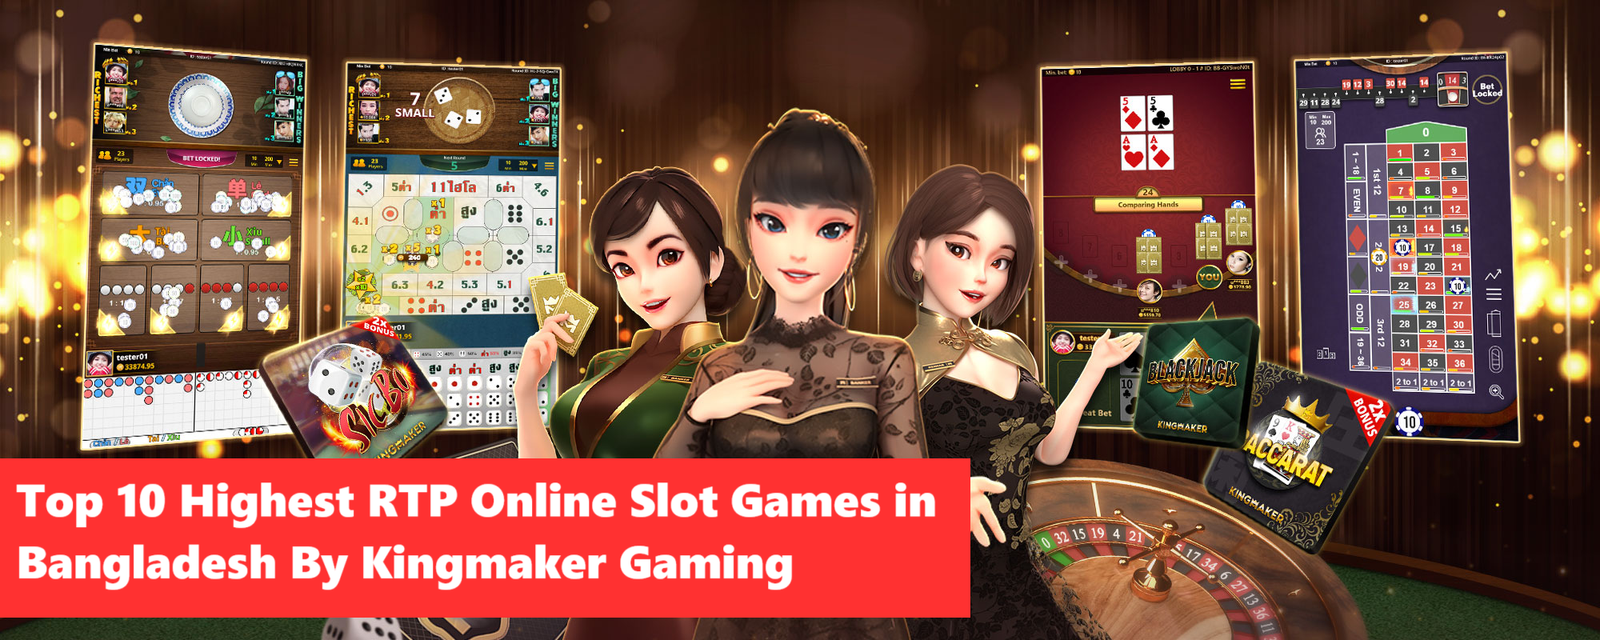 Top 10 Highest RTP Online Slot Games in Bangladesh By Kingmaker Gaming